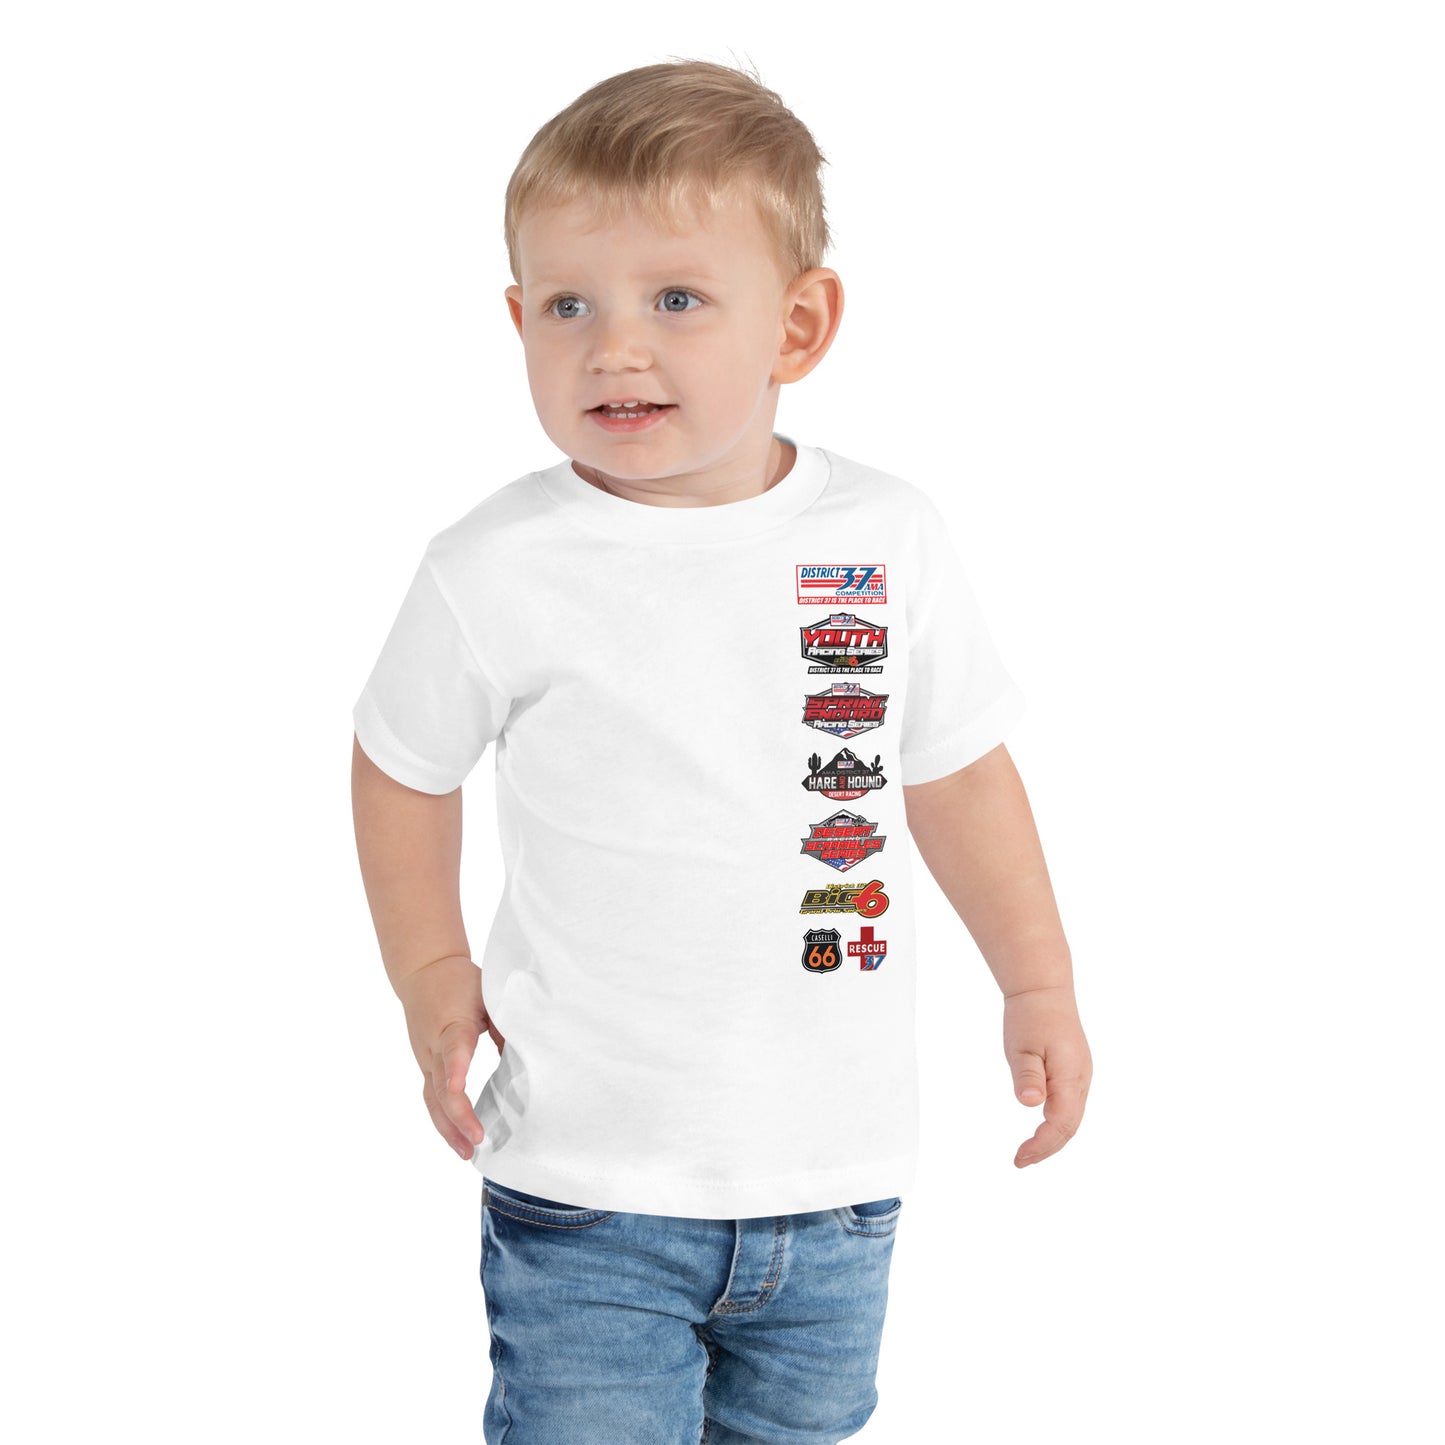 D37 Youth Series Shirt - Toddler Size Shirt